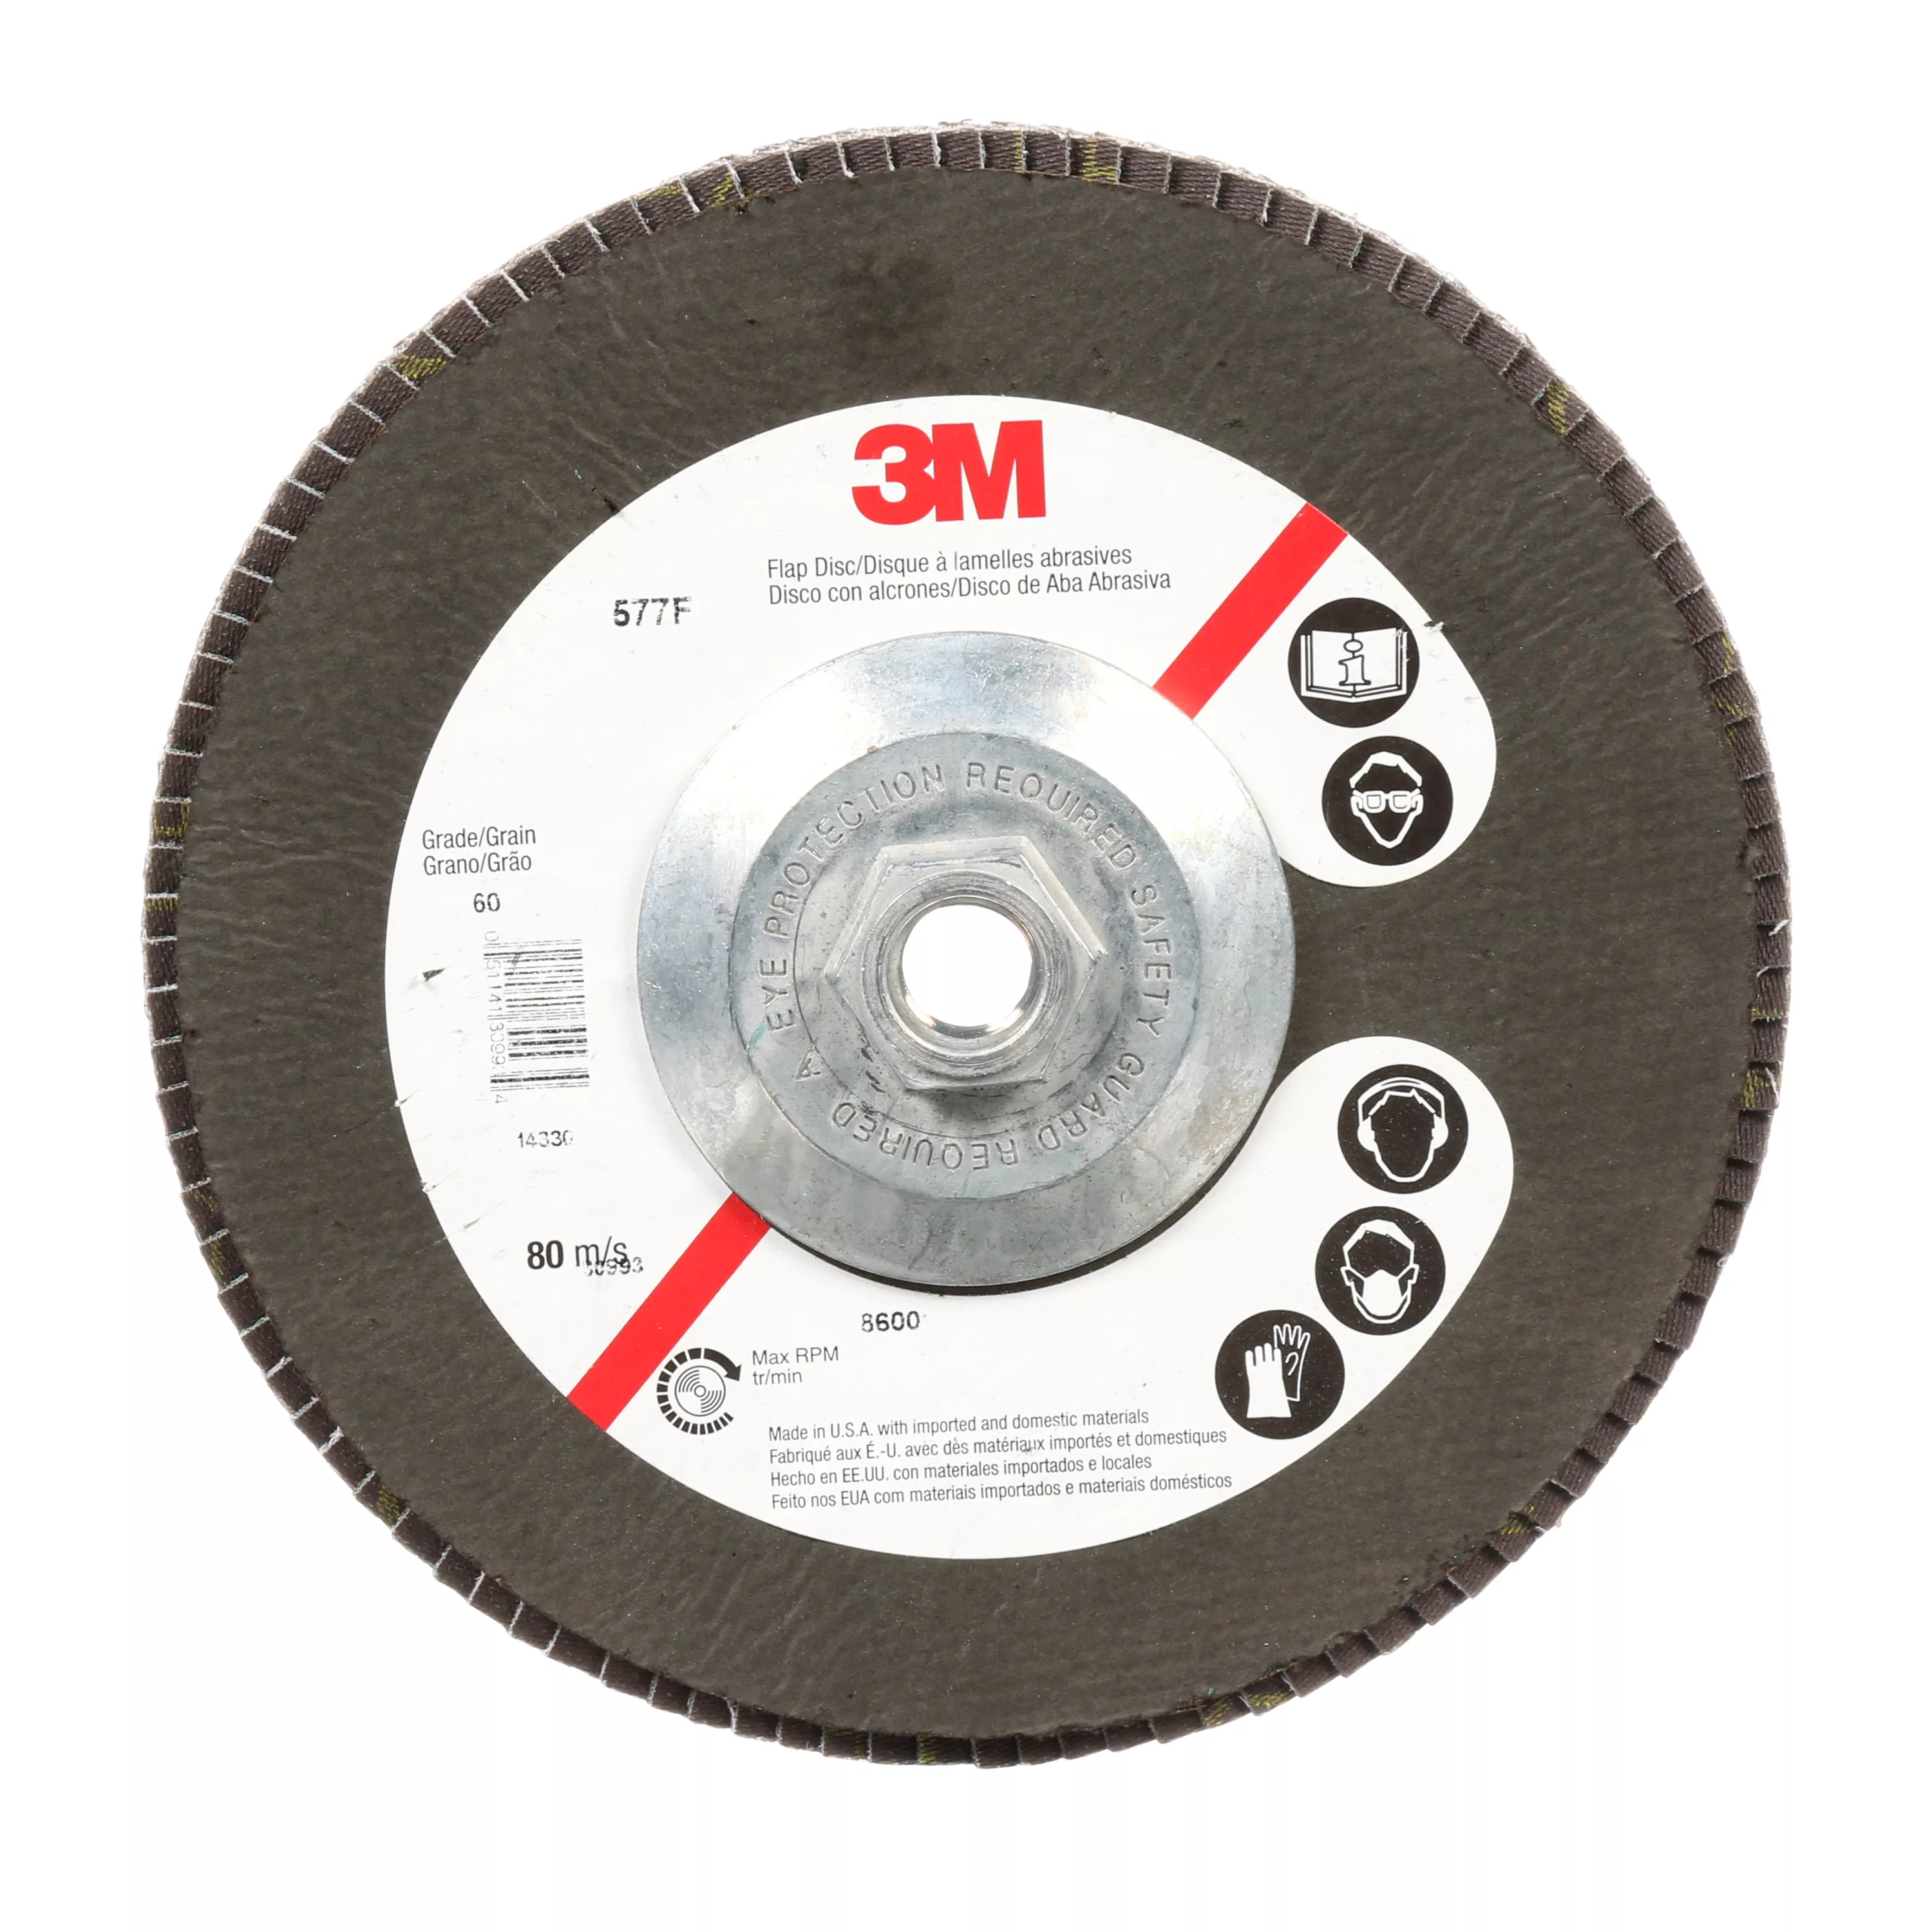 3M™ Flap Disc 577F, 80, T29 Quick Change, 4-1/2 in x 5/8 in-11, 10
ea/Case